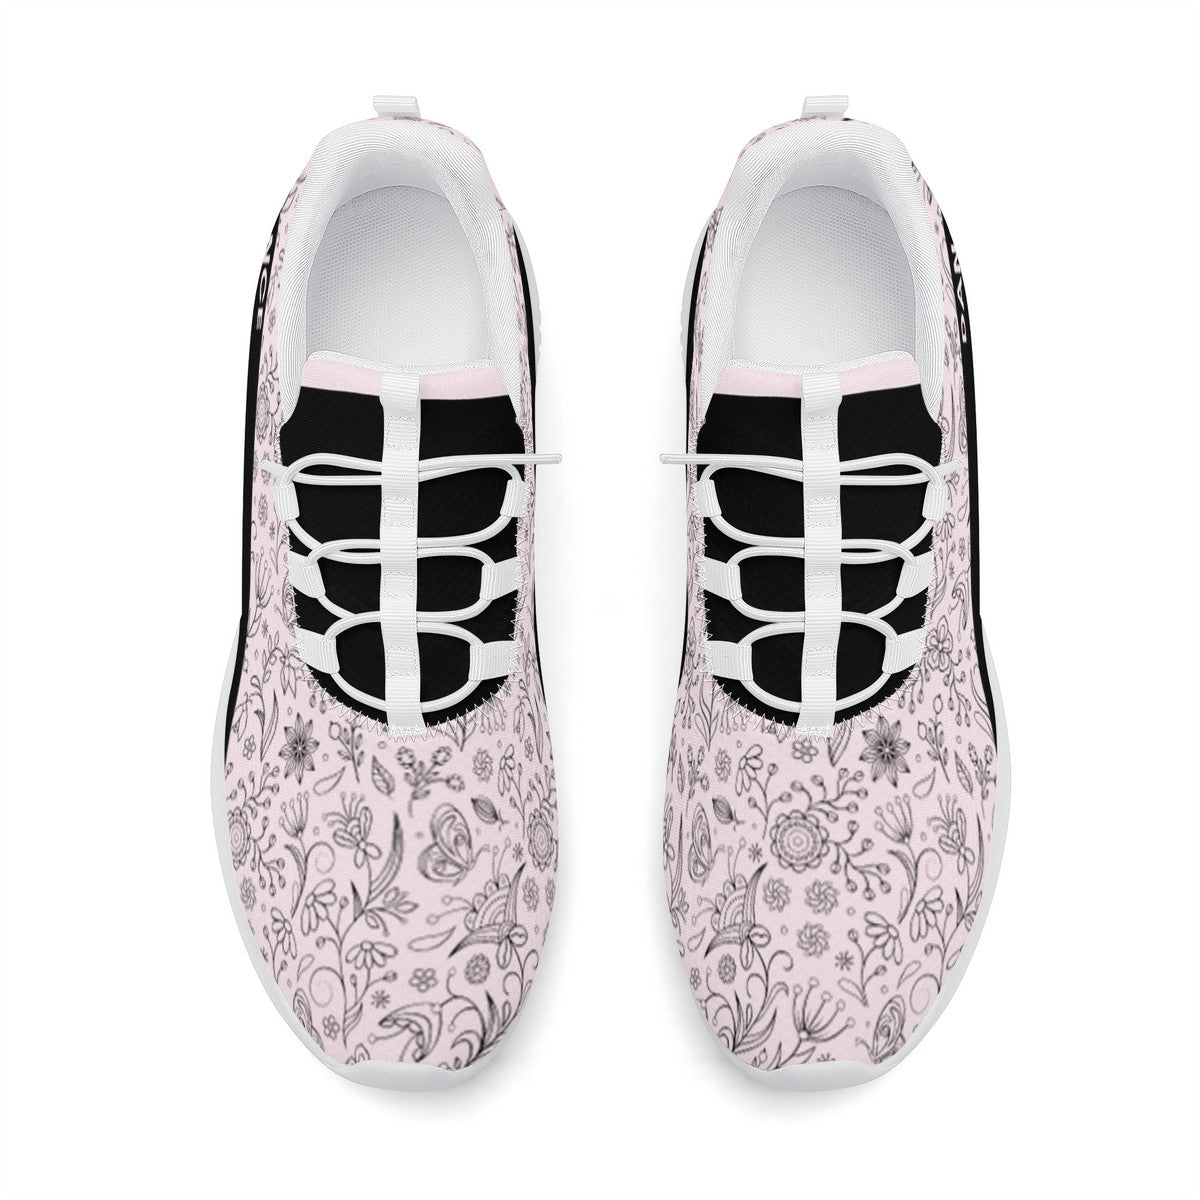 Dance Sneakers - Floral Pink